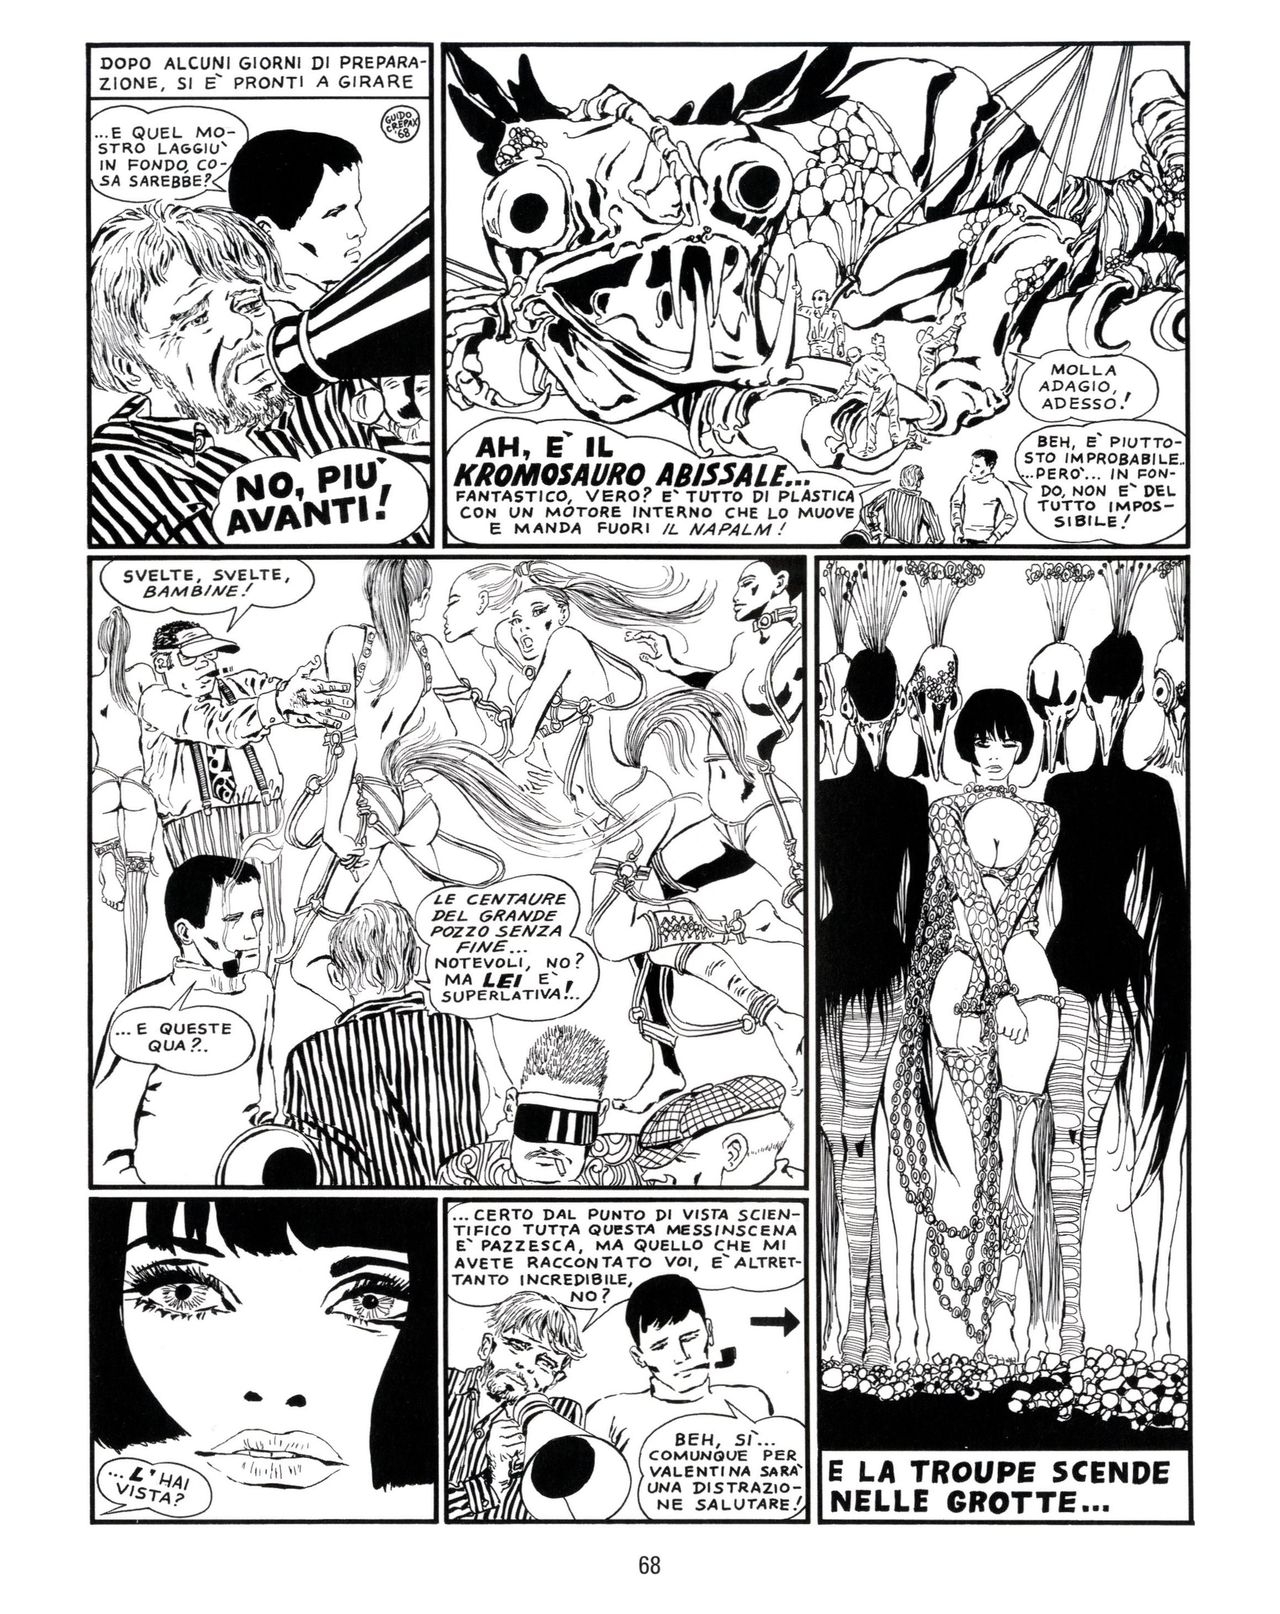 [Guido Crepax] Erotica Fumetti #25 : L'ascesa dei sotterranei : I cavalieri ciechi [Italian] 69